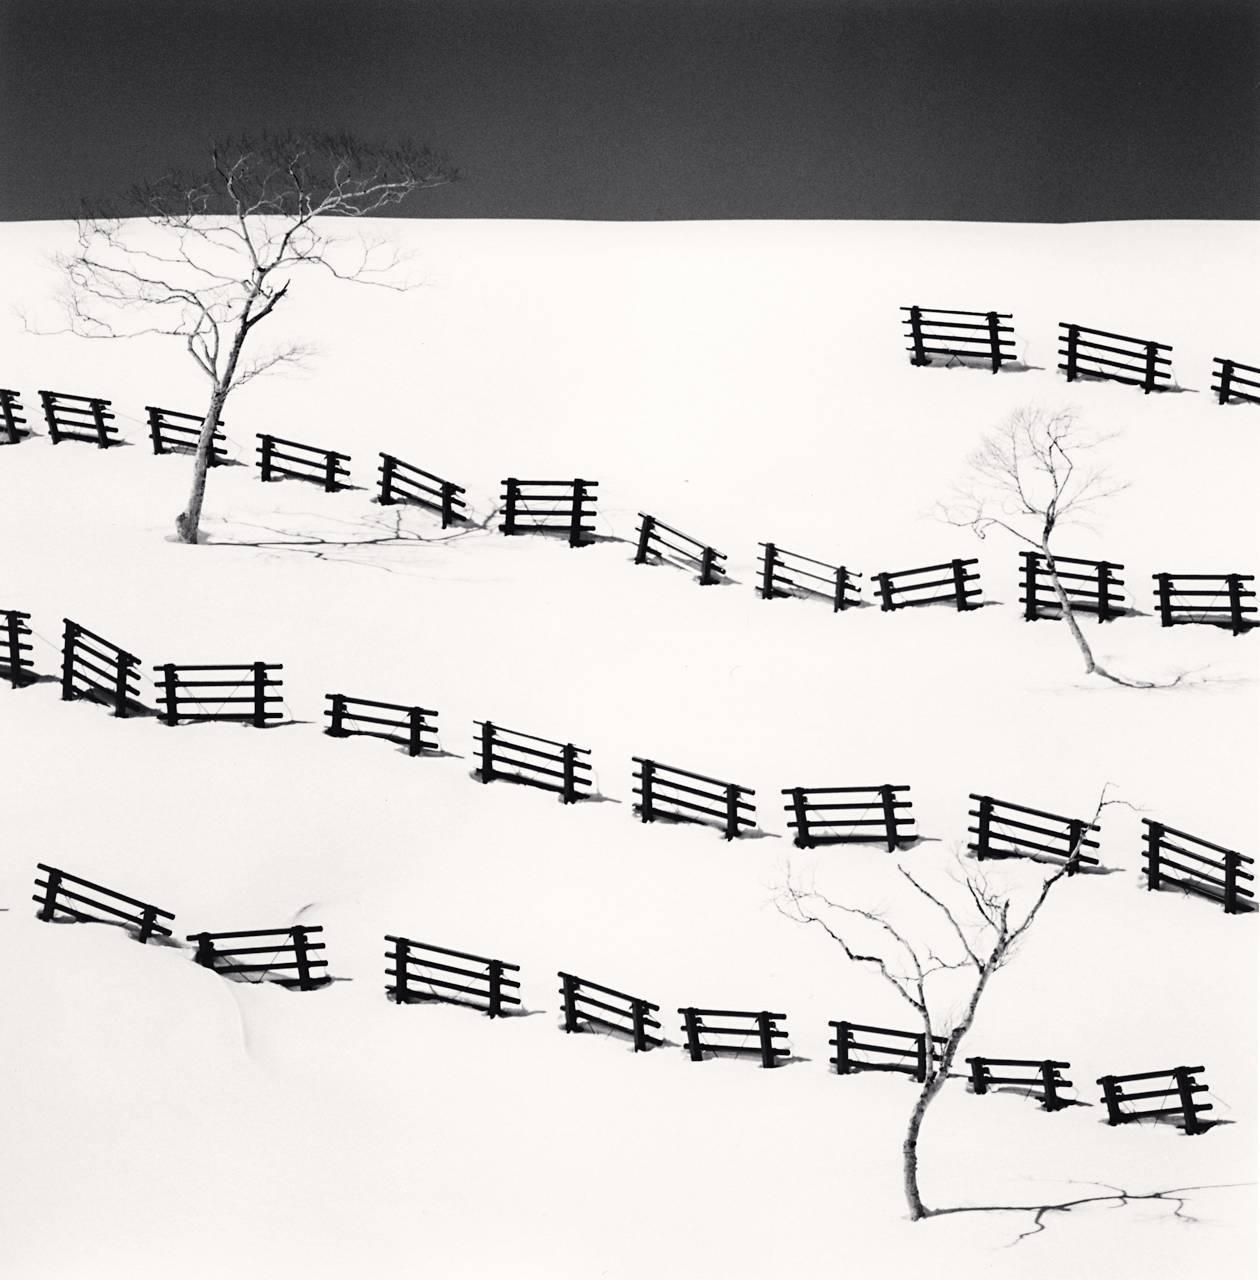 Michael Kenna Landscape Photograph - Thirty One Snow Fences, Bihoro, Hokkaido, Japan